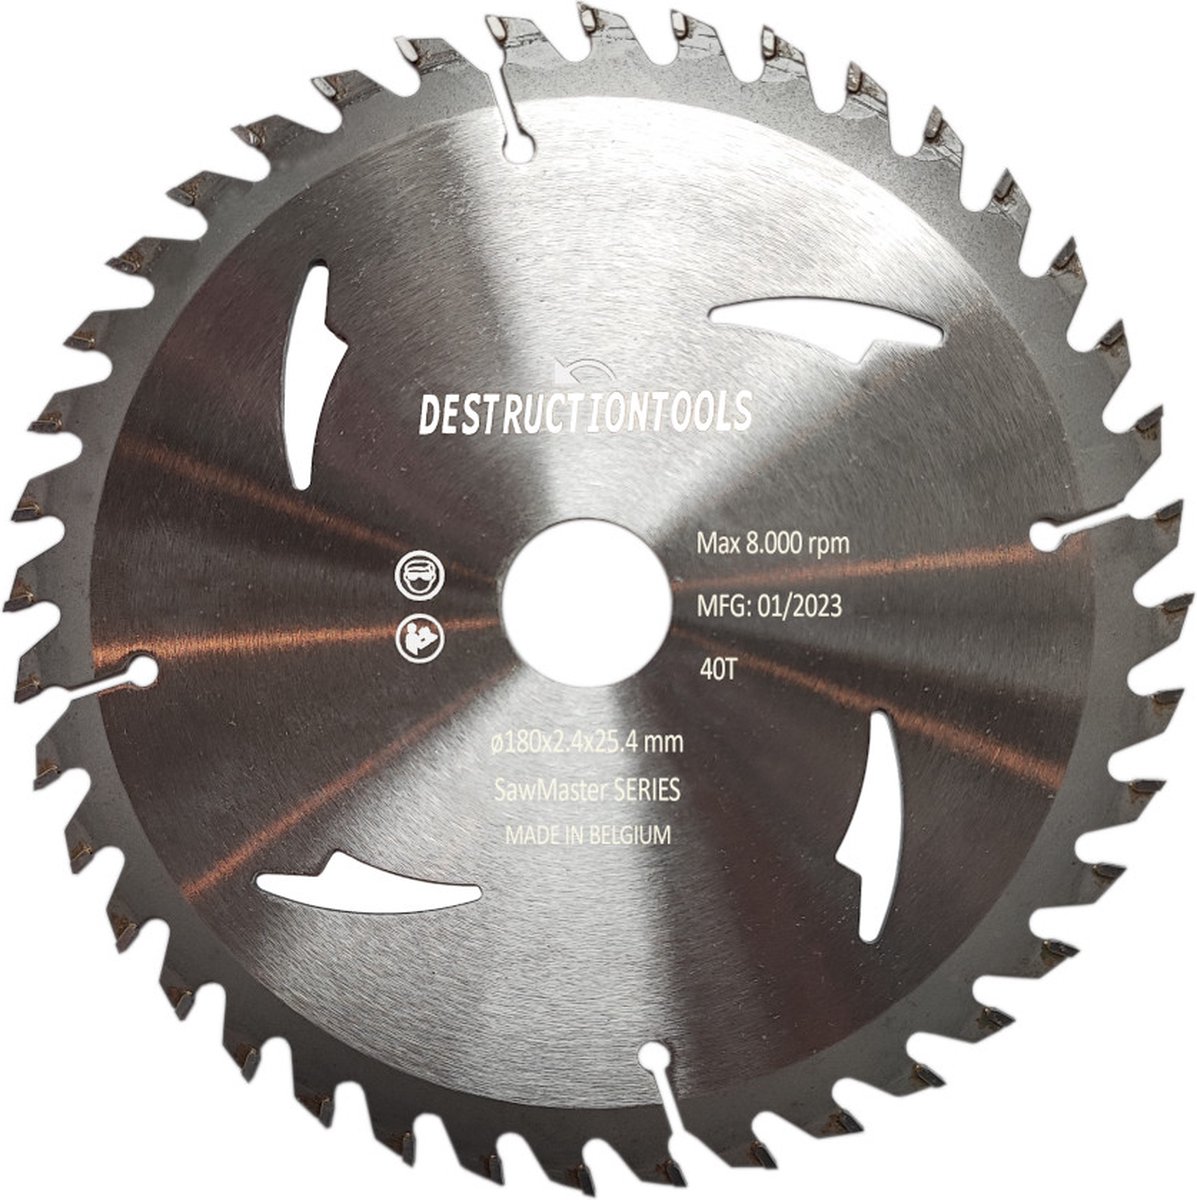 Destructiontools tct cirkelzaagblad 180mm - hout - D180mm, asgat 25.4mm - SawMaster series